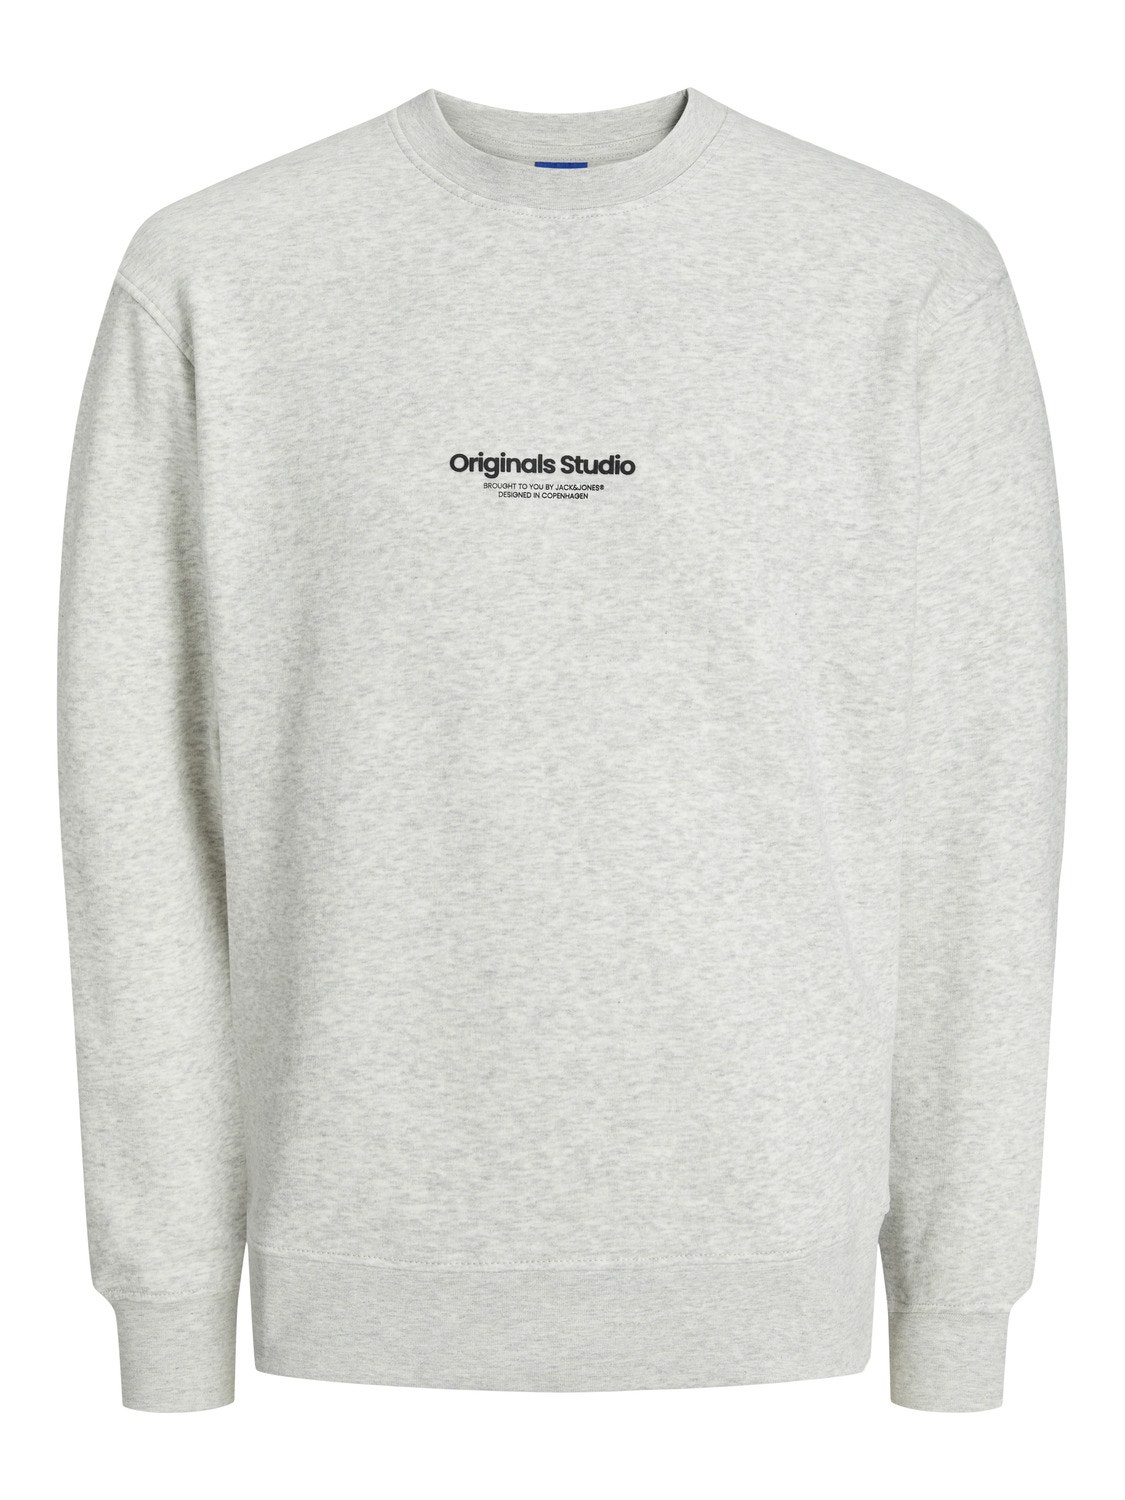 Jack & Jones Printed Crewn Neck Sweatshirt -White Melange - 12241694